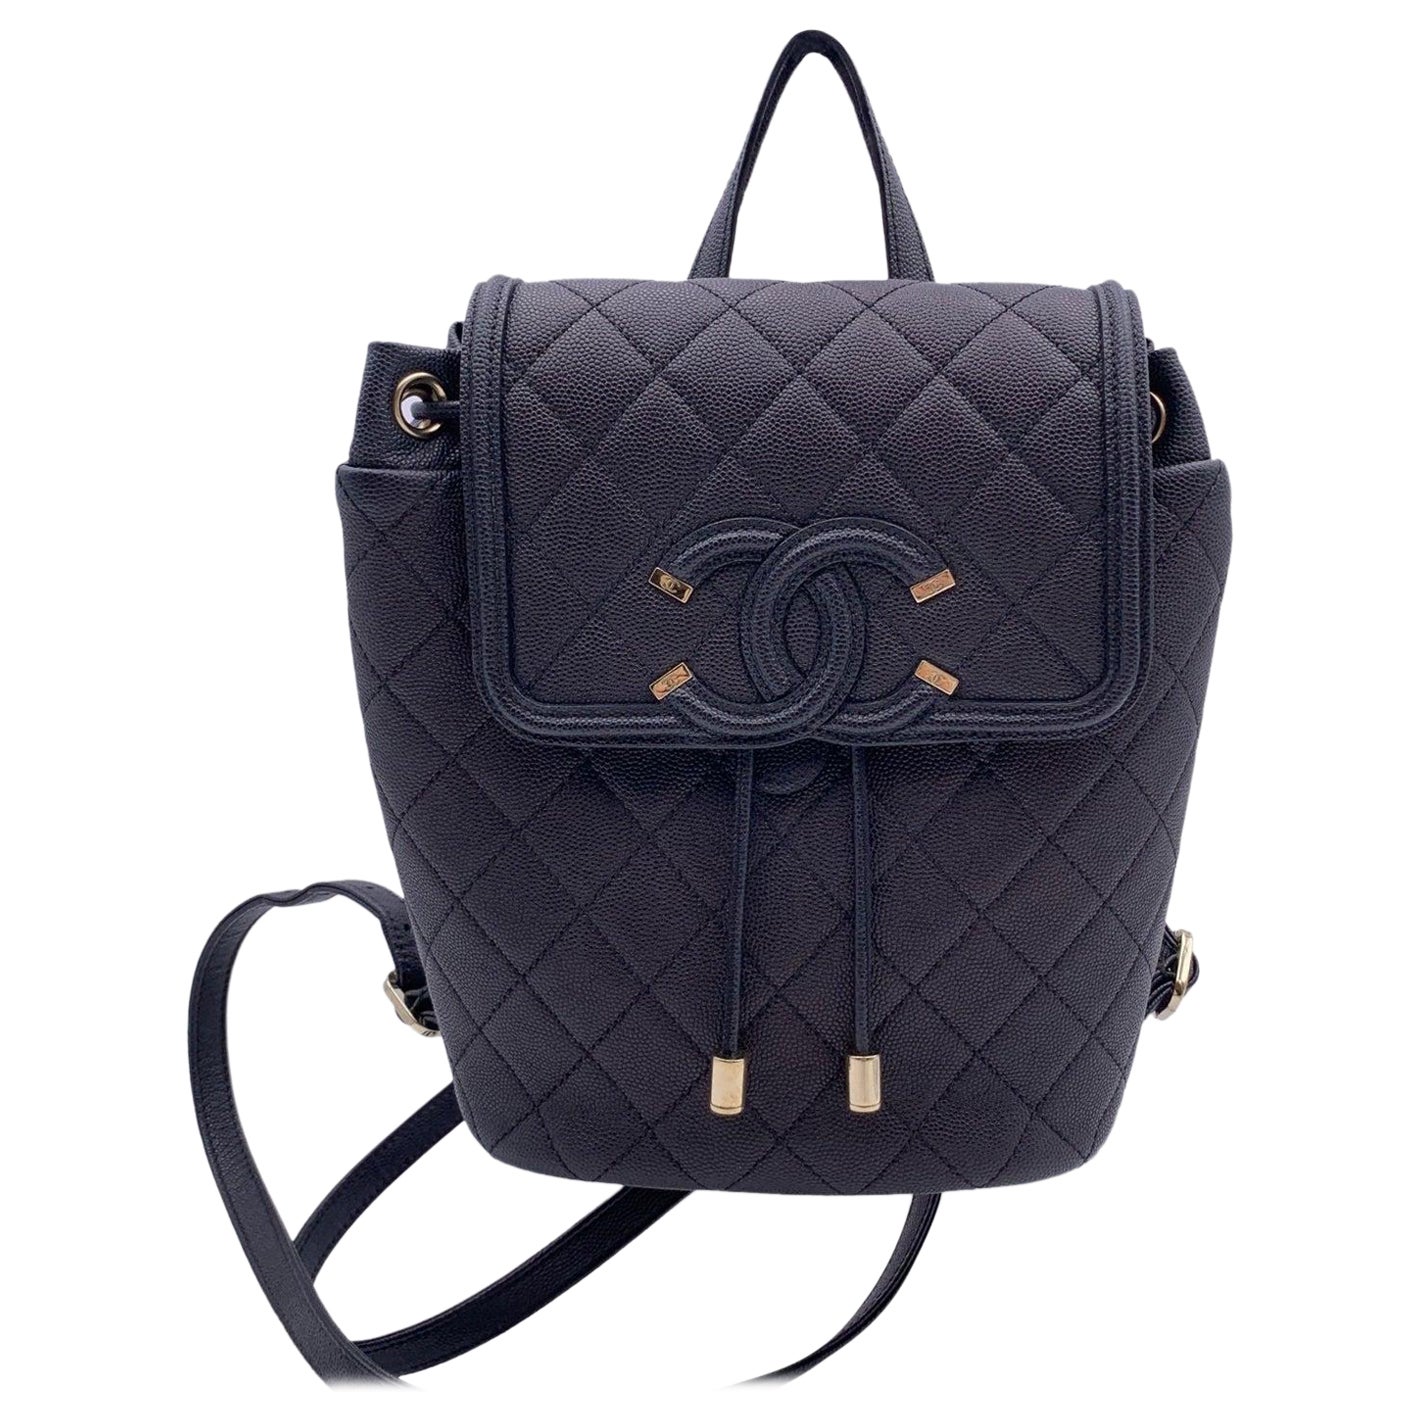 Does Chanel make backpacks?